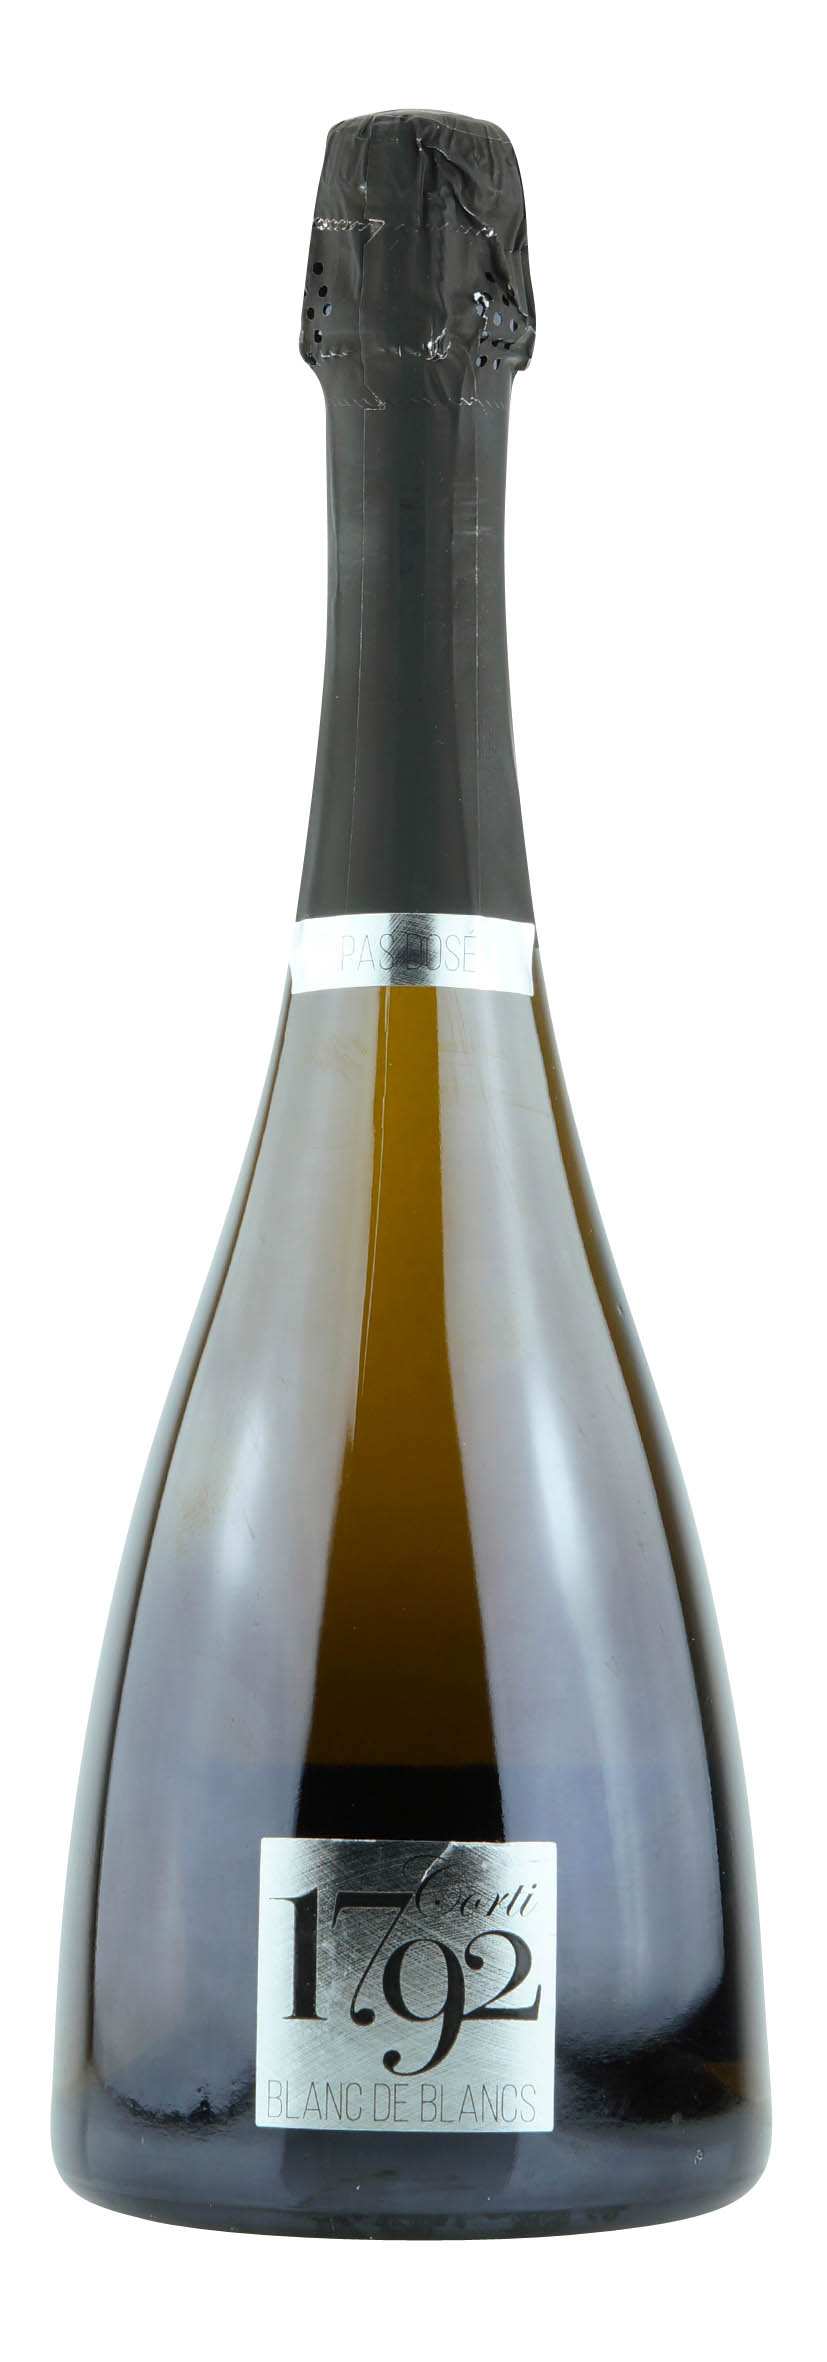 Ticino DOC Chardonnay Corti 1792 Blanc de Blancs 2014